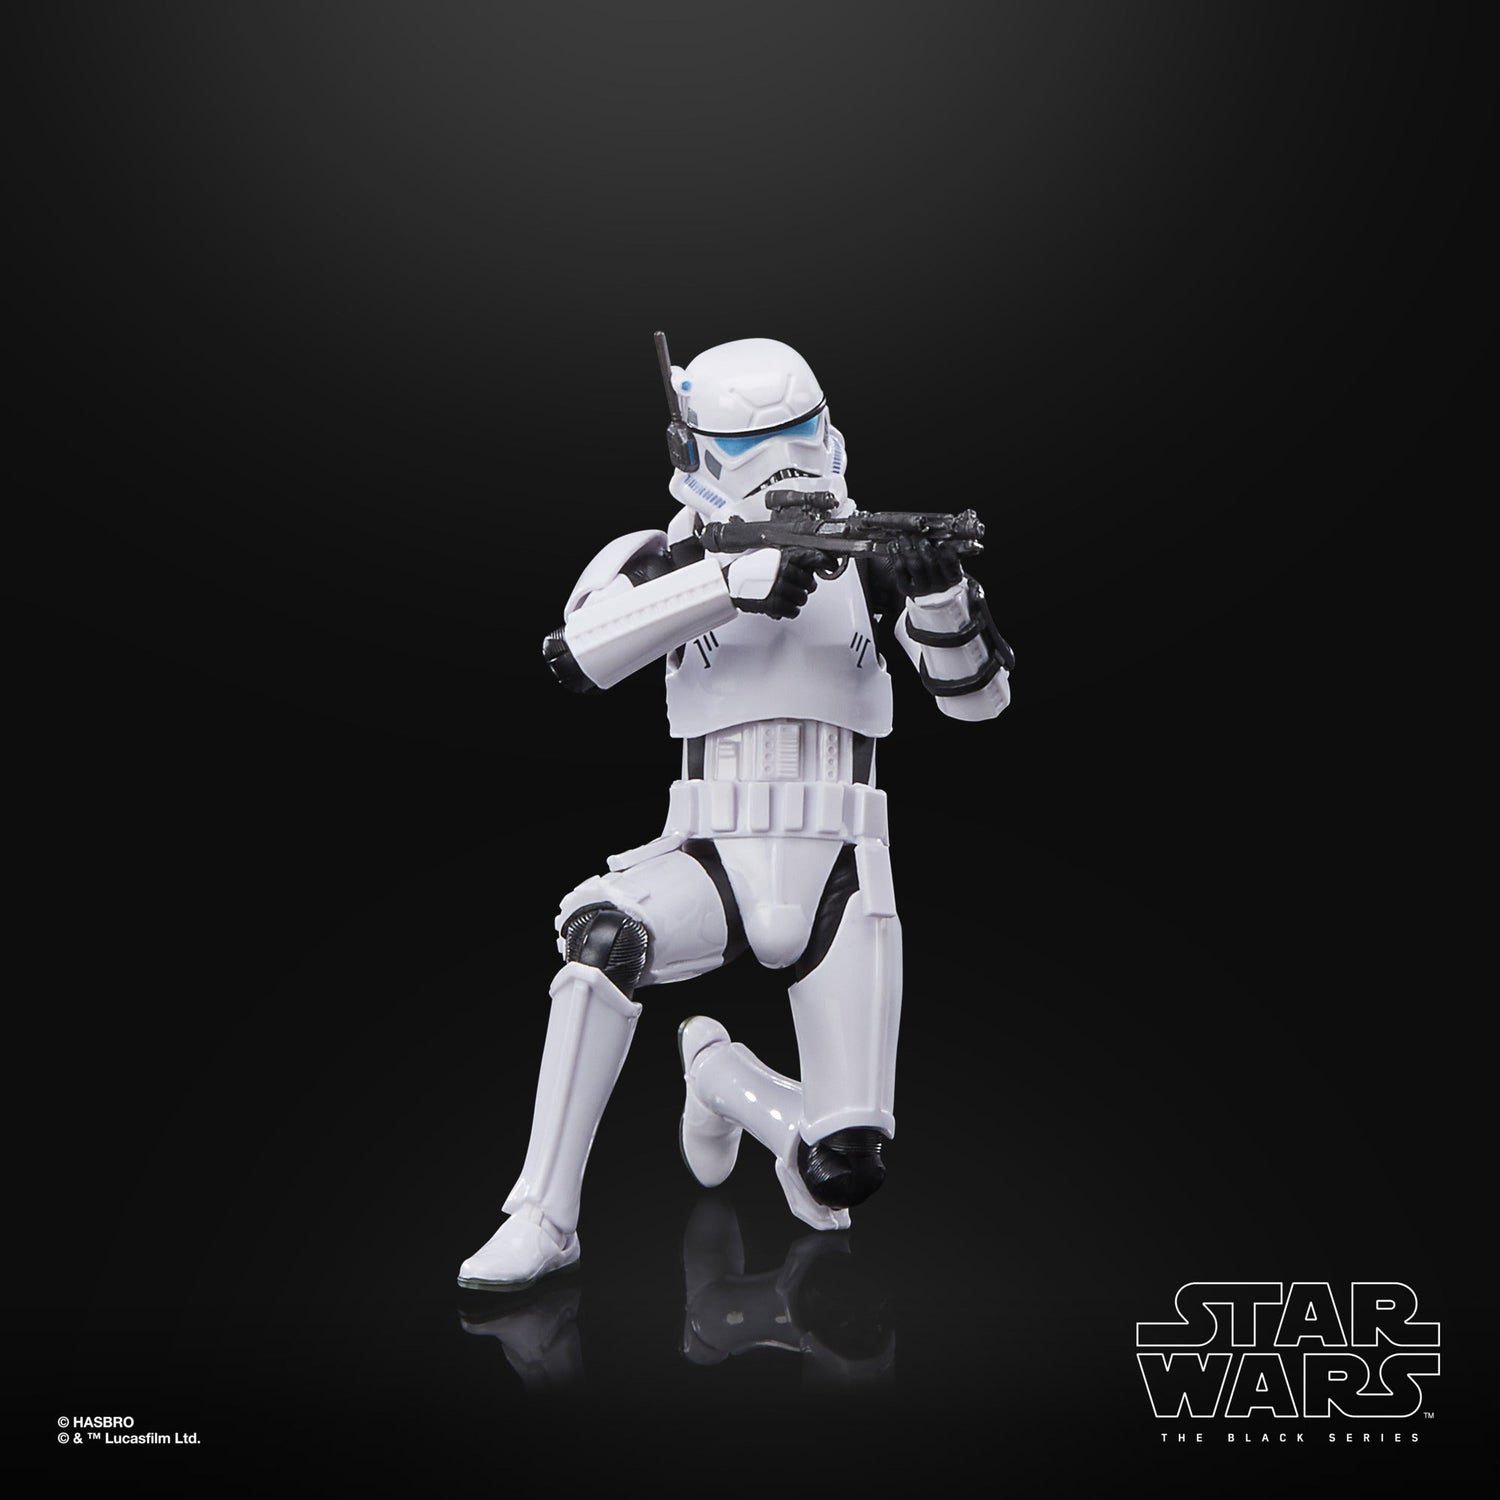 Star Wars: The Black Series SCAR Trooper Mic Hasbro